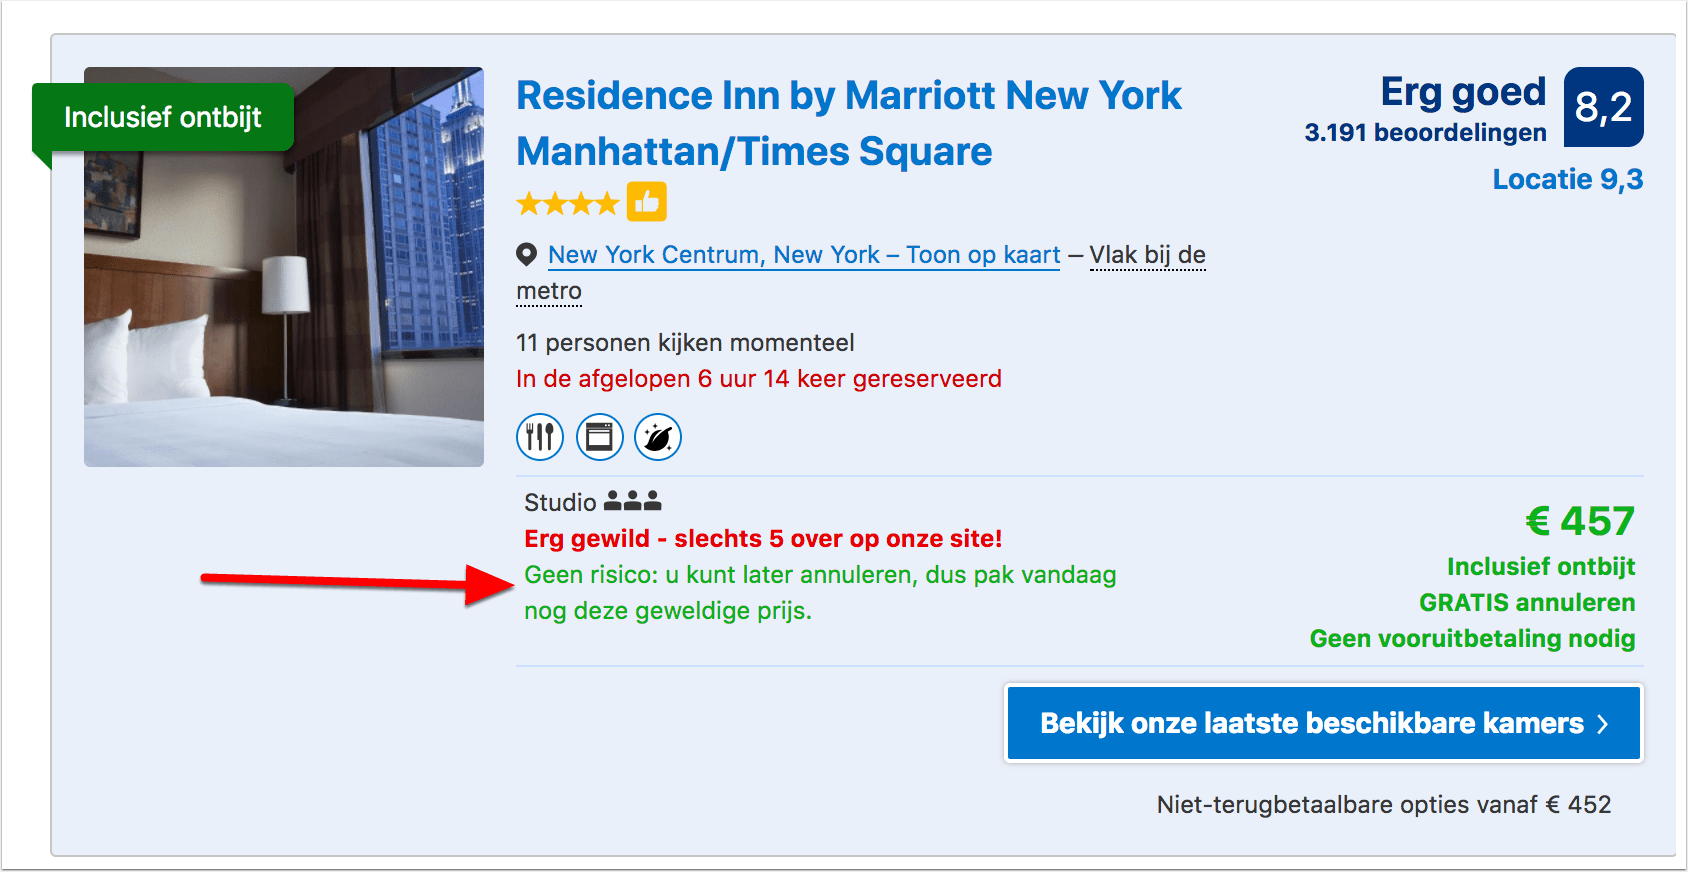 bookingcom--371-hotels-in-new-york-new-york-centrum-reserveer-nu-uw-hotel-1.png